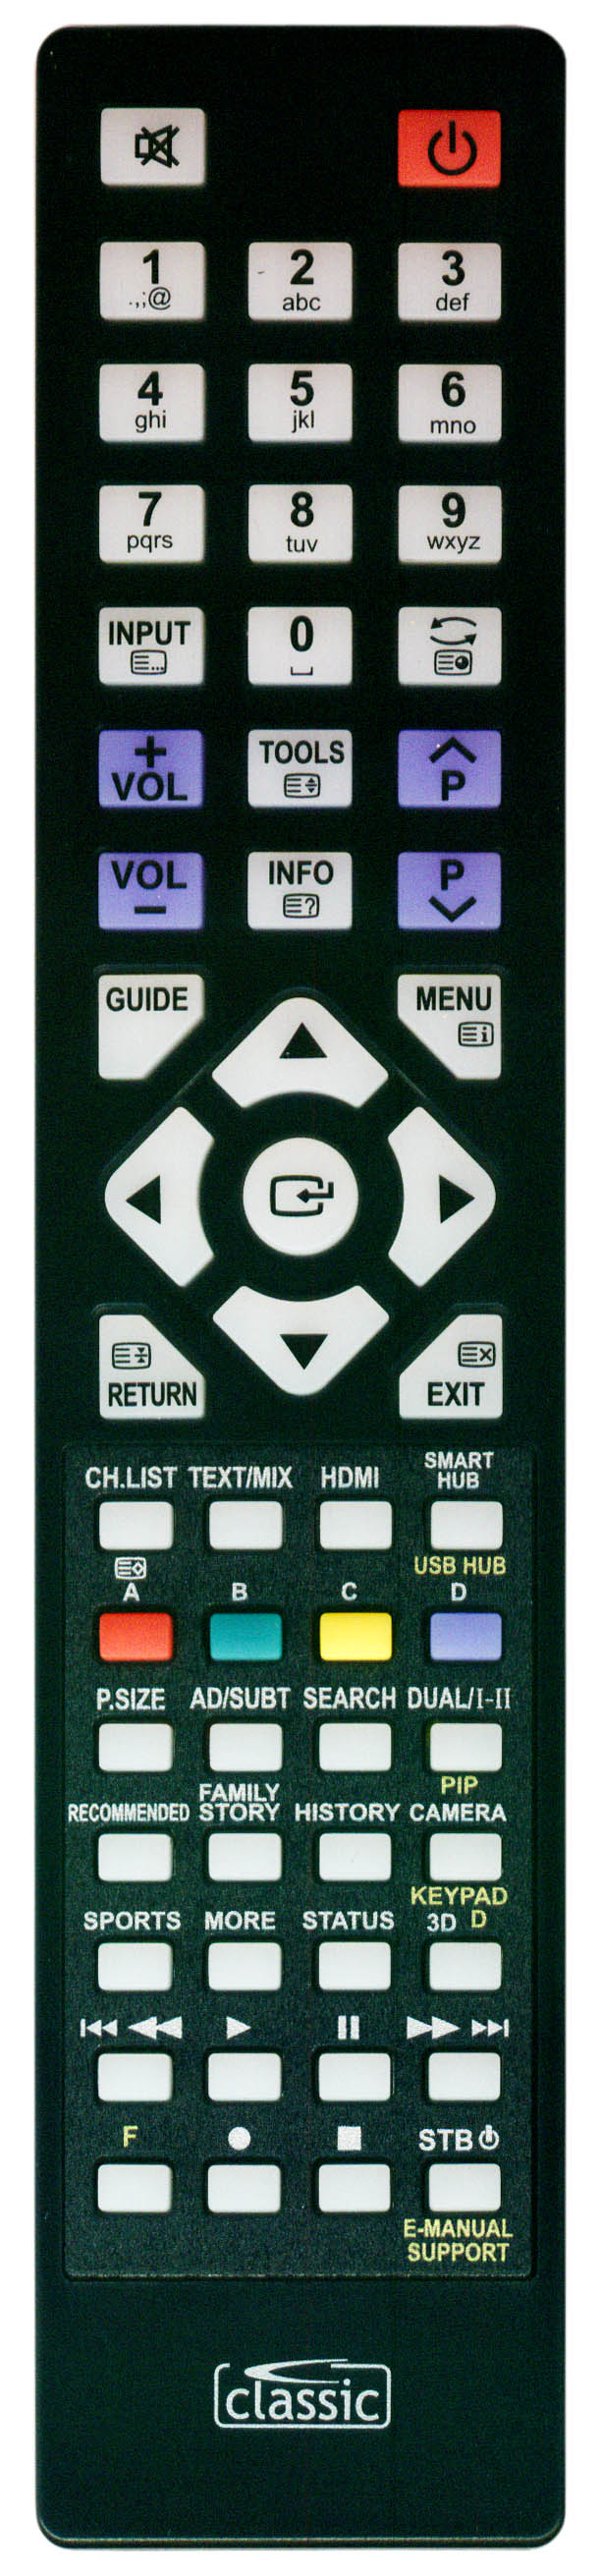 Samsung UE105S9WATXXC Remote Control